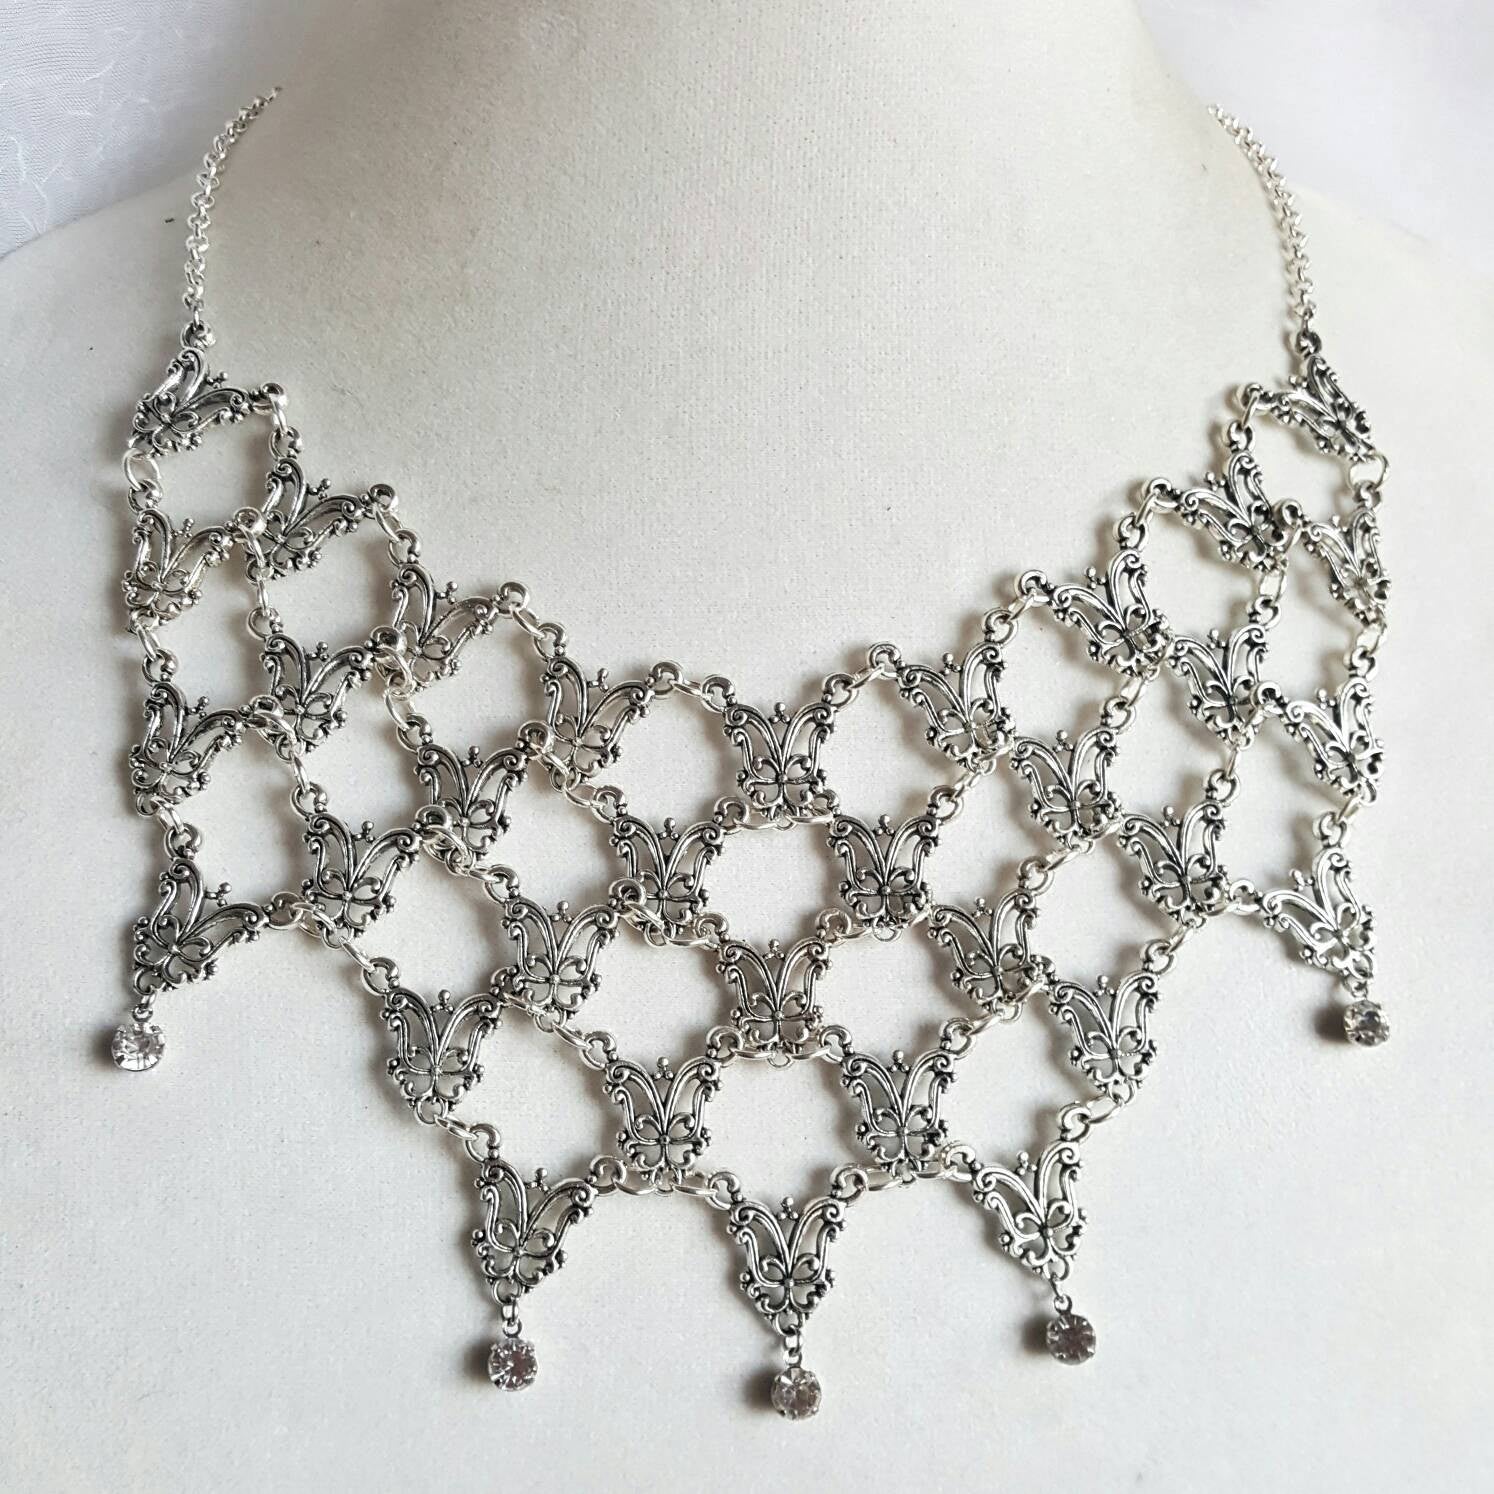 Silver Victorian Necklace - Bridal Jewelry - Ren Faire Costume - Victorian Jewelry - Fantasy Jewelry - Prom Jewelry - Handmade Gift Idea - DRAVYNMOOR